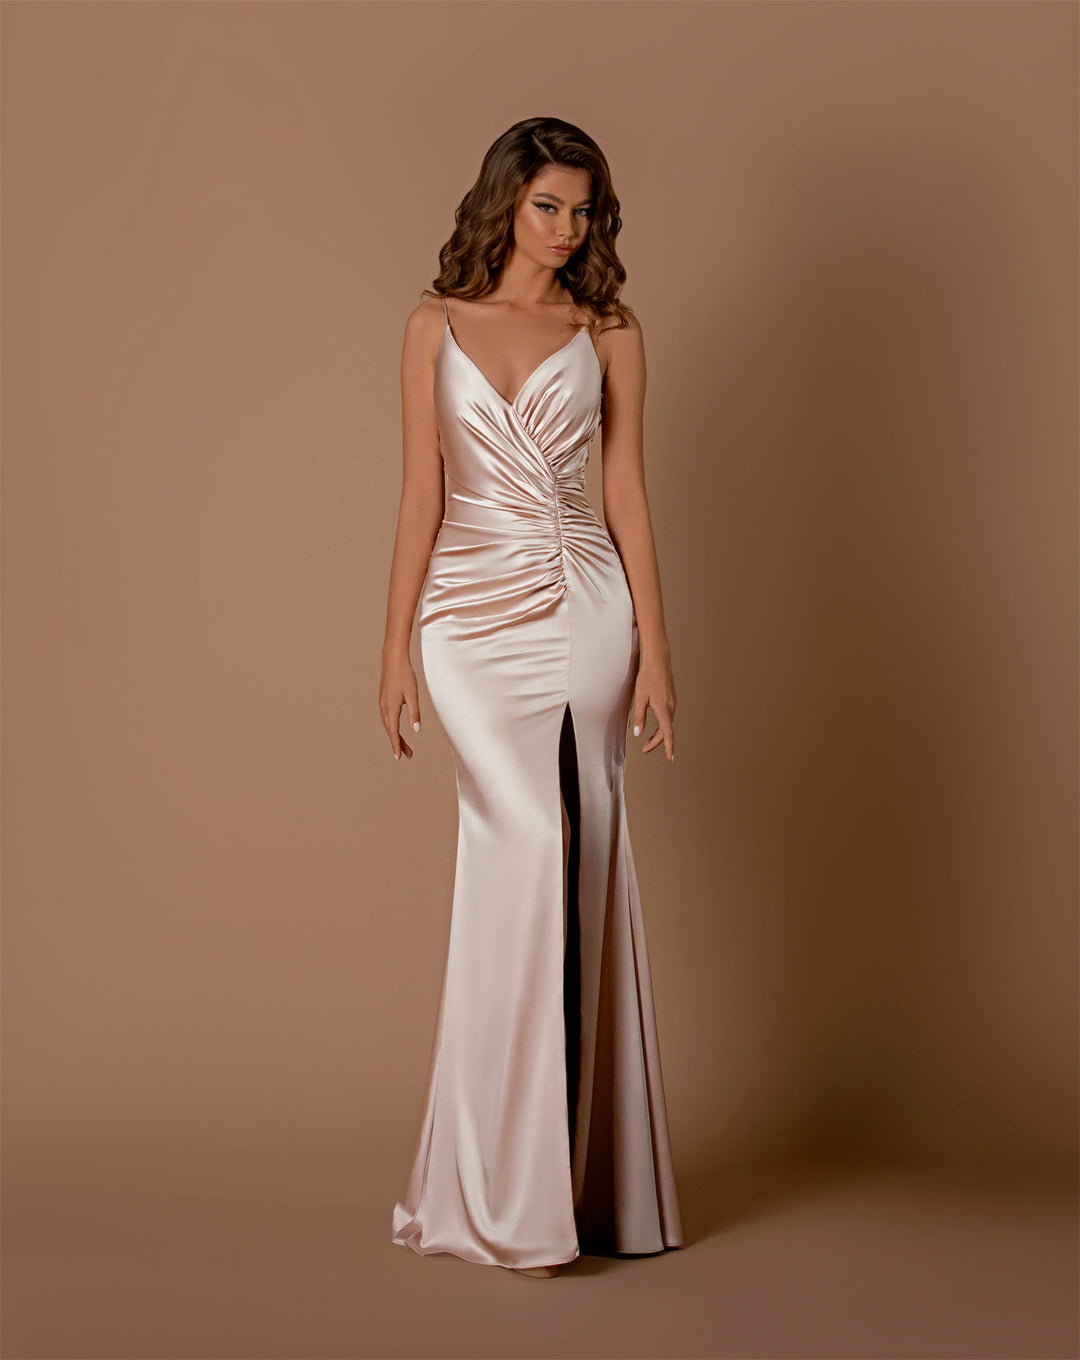 Gia Dress by Nicoletta NBM1036 - ElissaJay Boutique